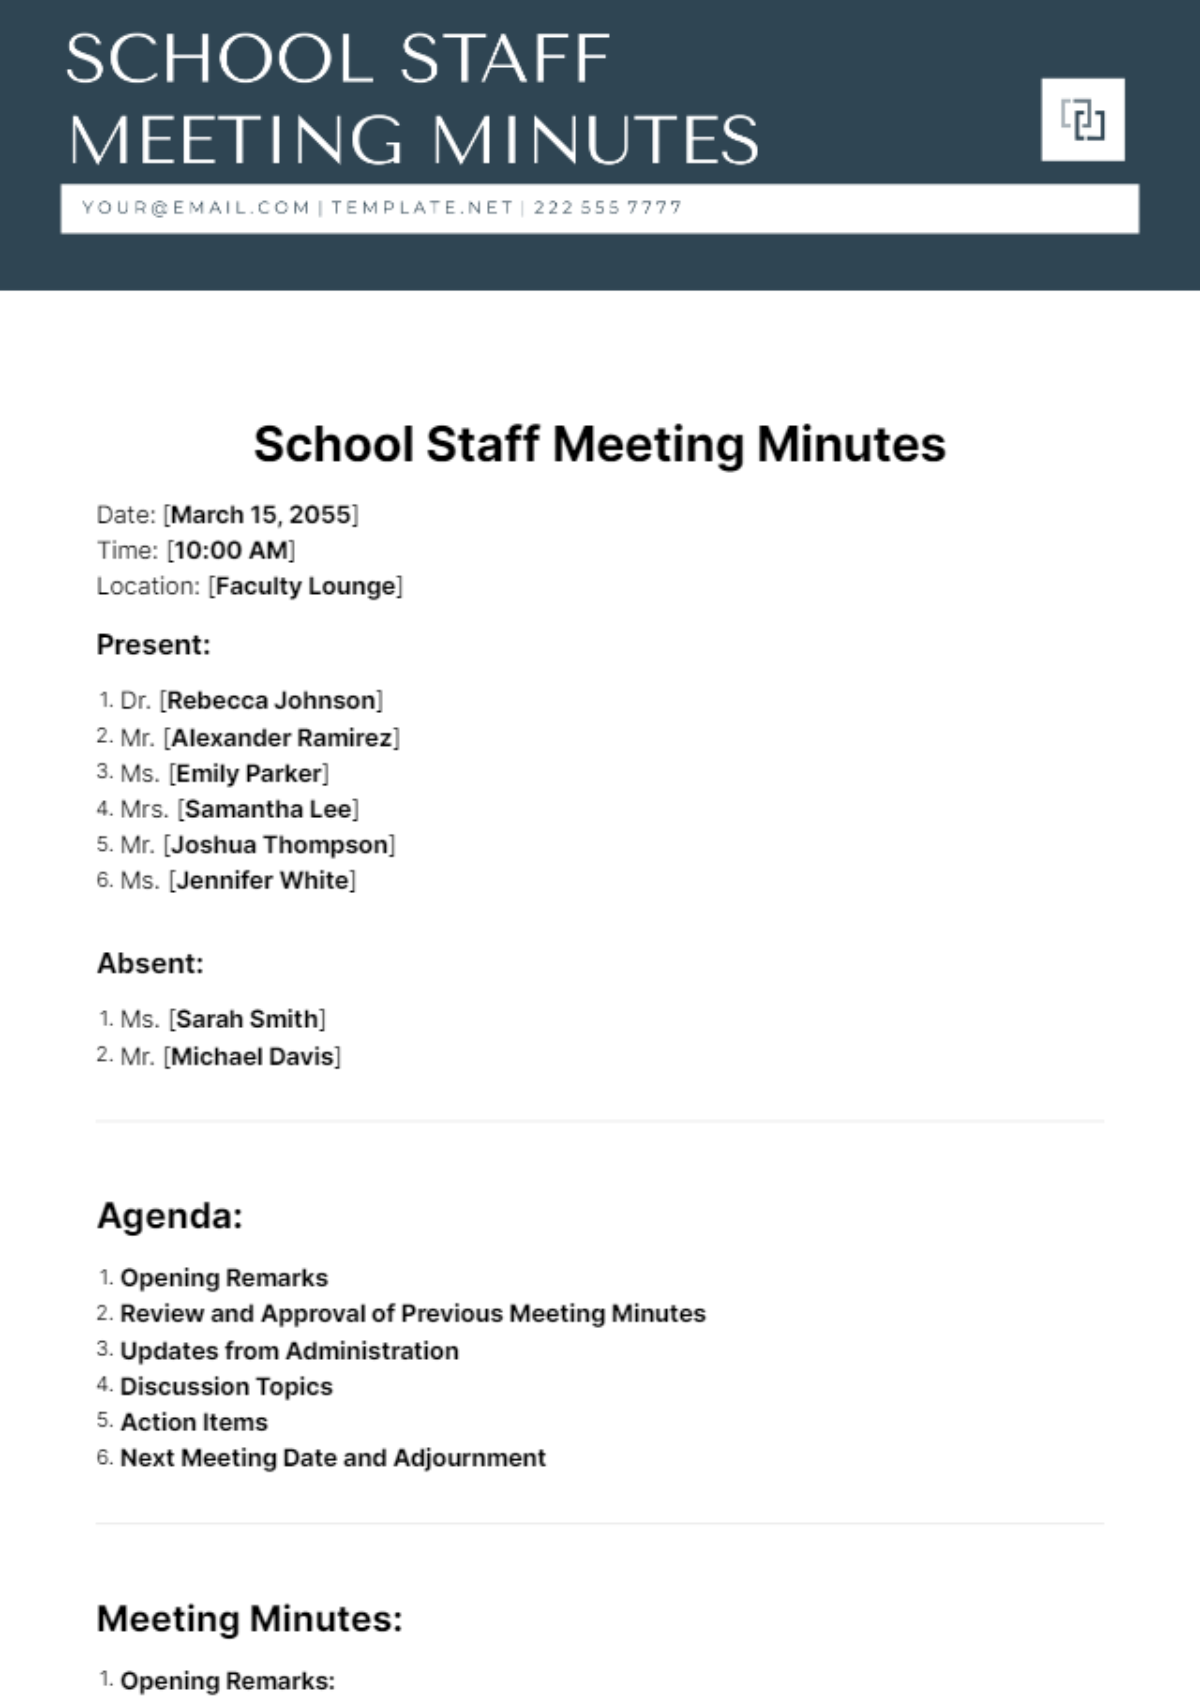 School Staff Meeting Minutes Template